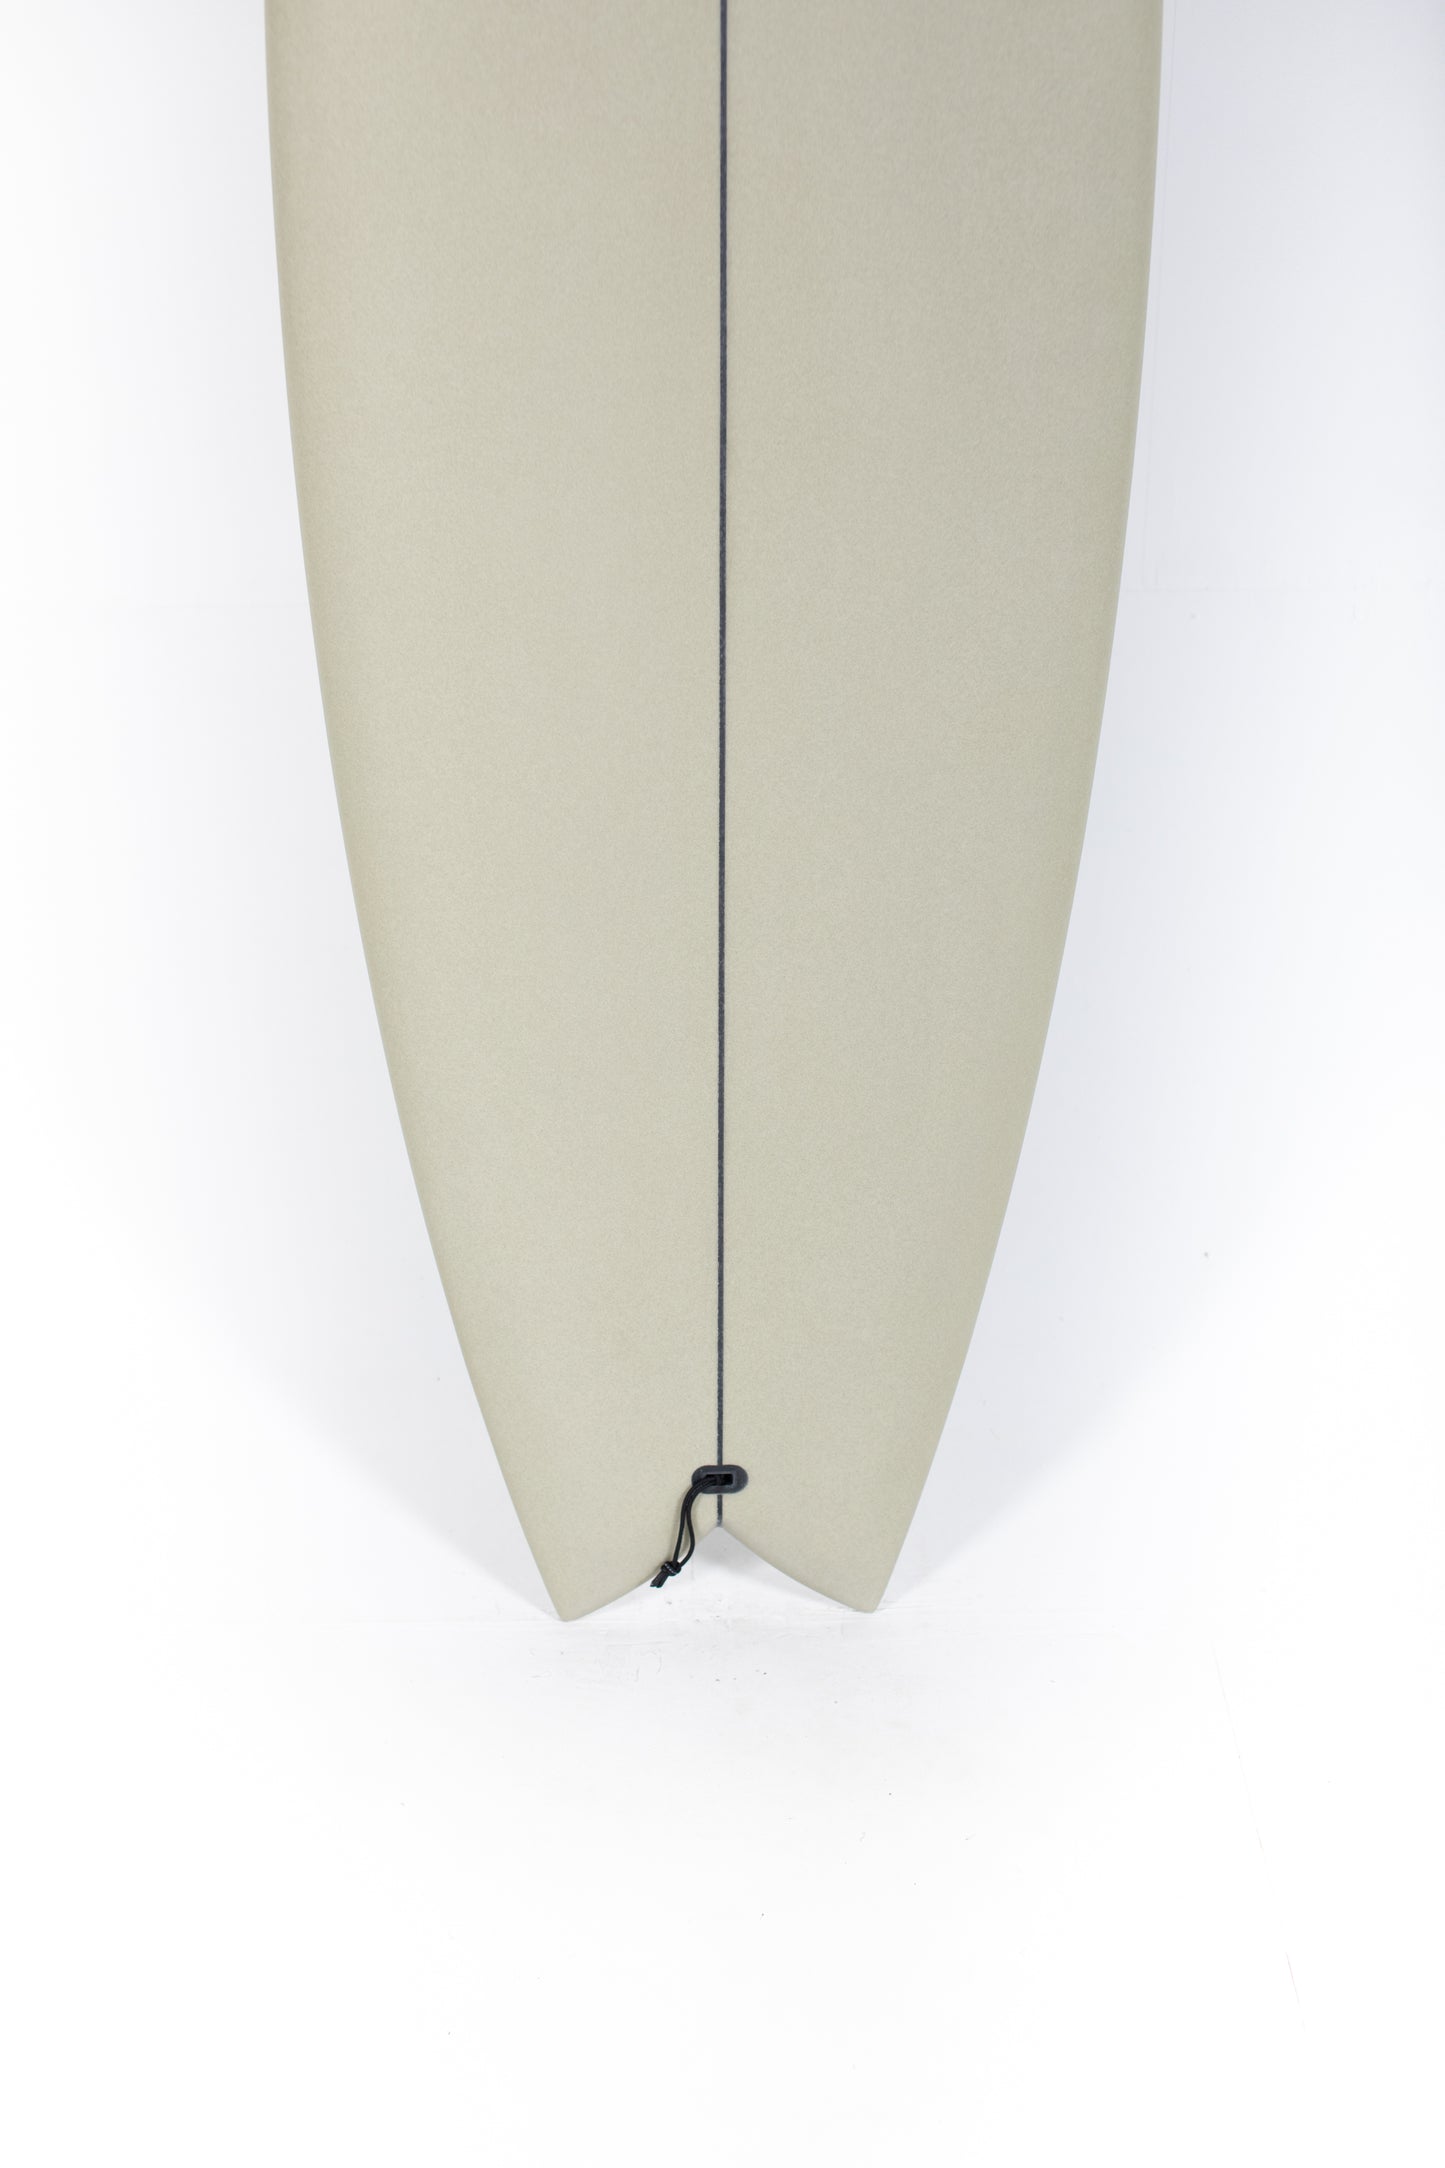 
                  
                    Pukas Surf Shop - HaydenShapes Surfboard - HYPTO KRYPTO TWIN PU - 6'0" X 20 1/2" X 2 3/4" - 36.98L
                  
                